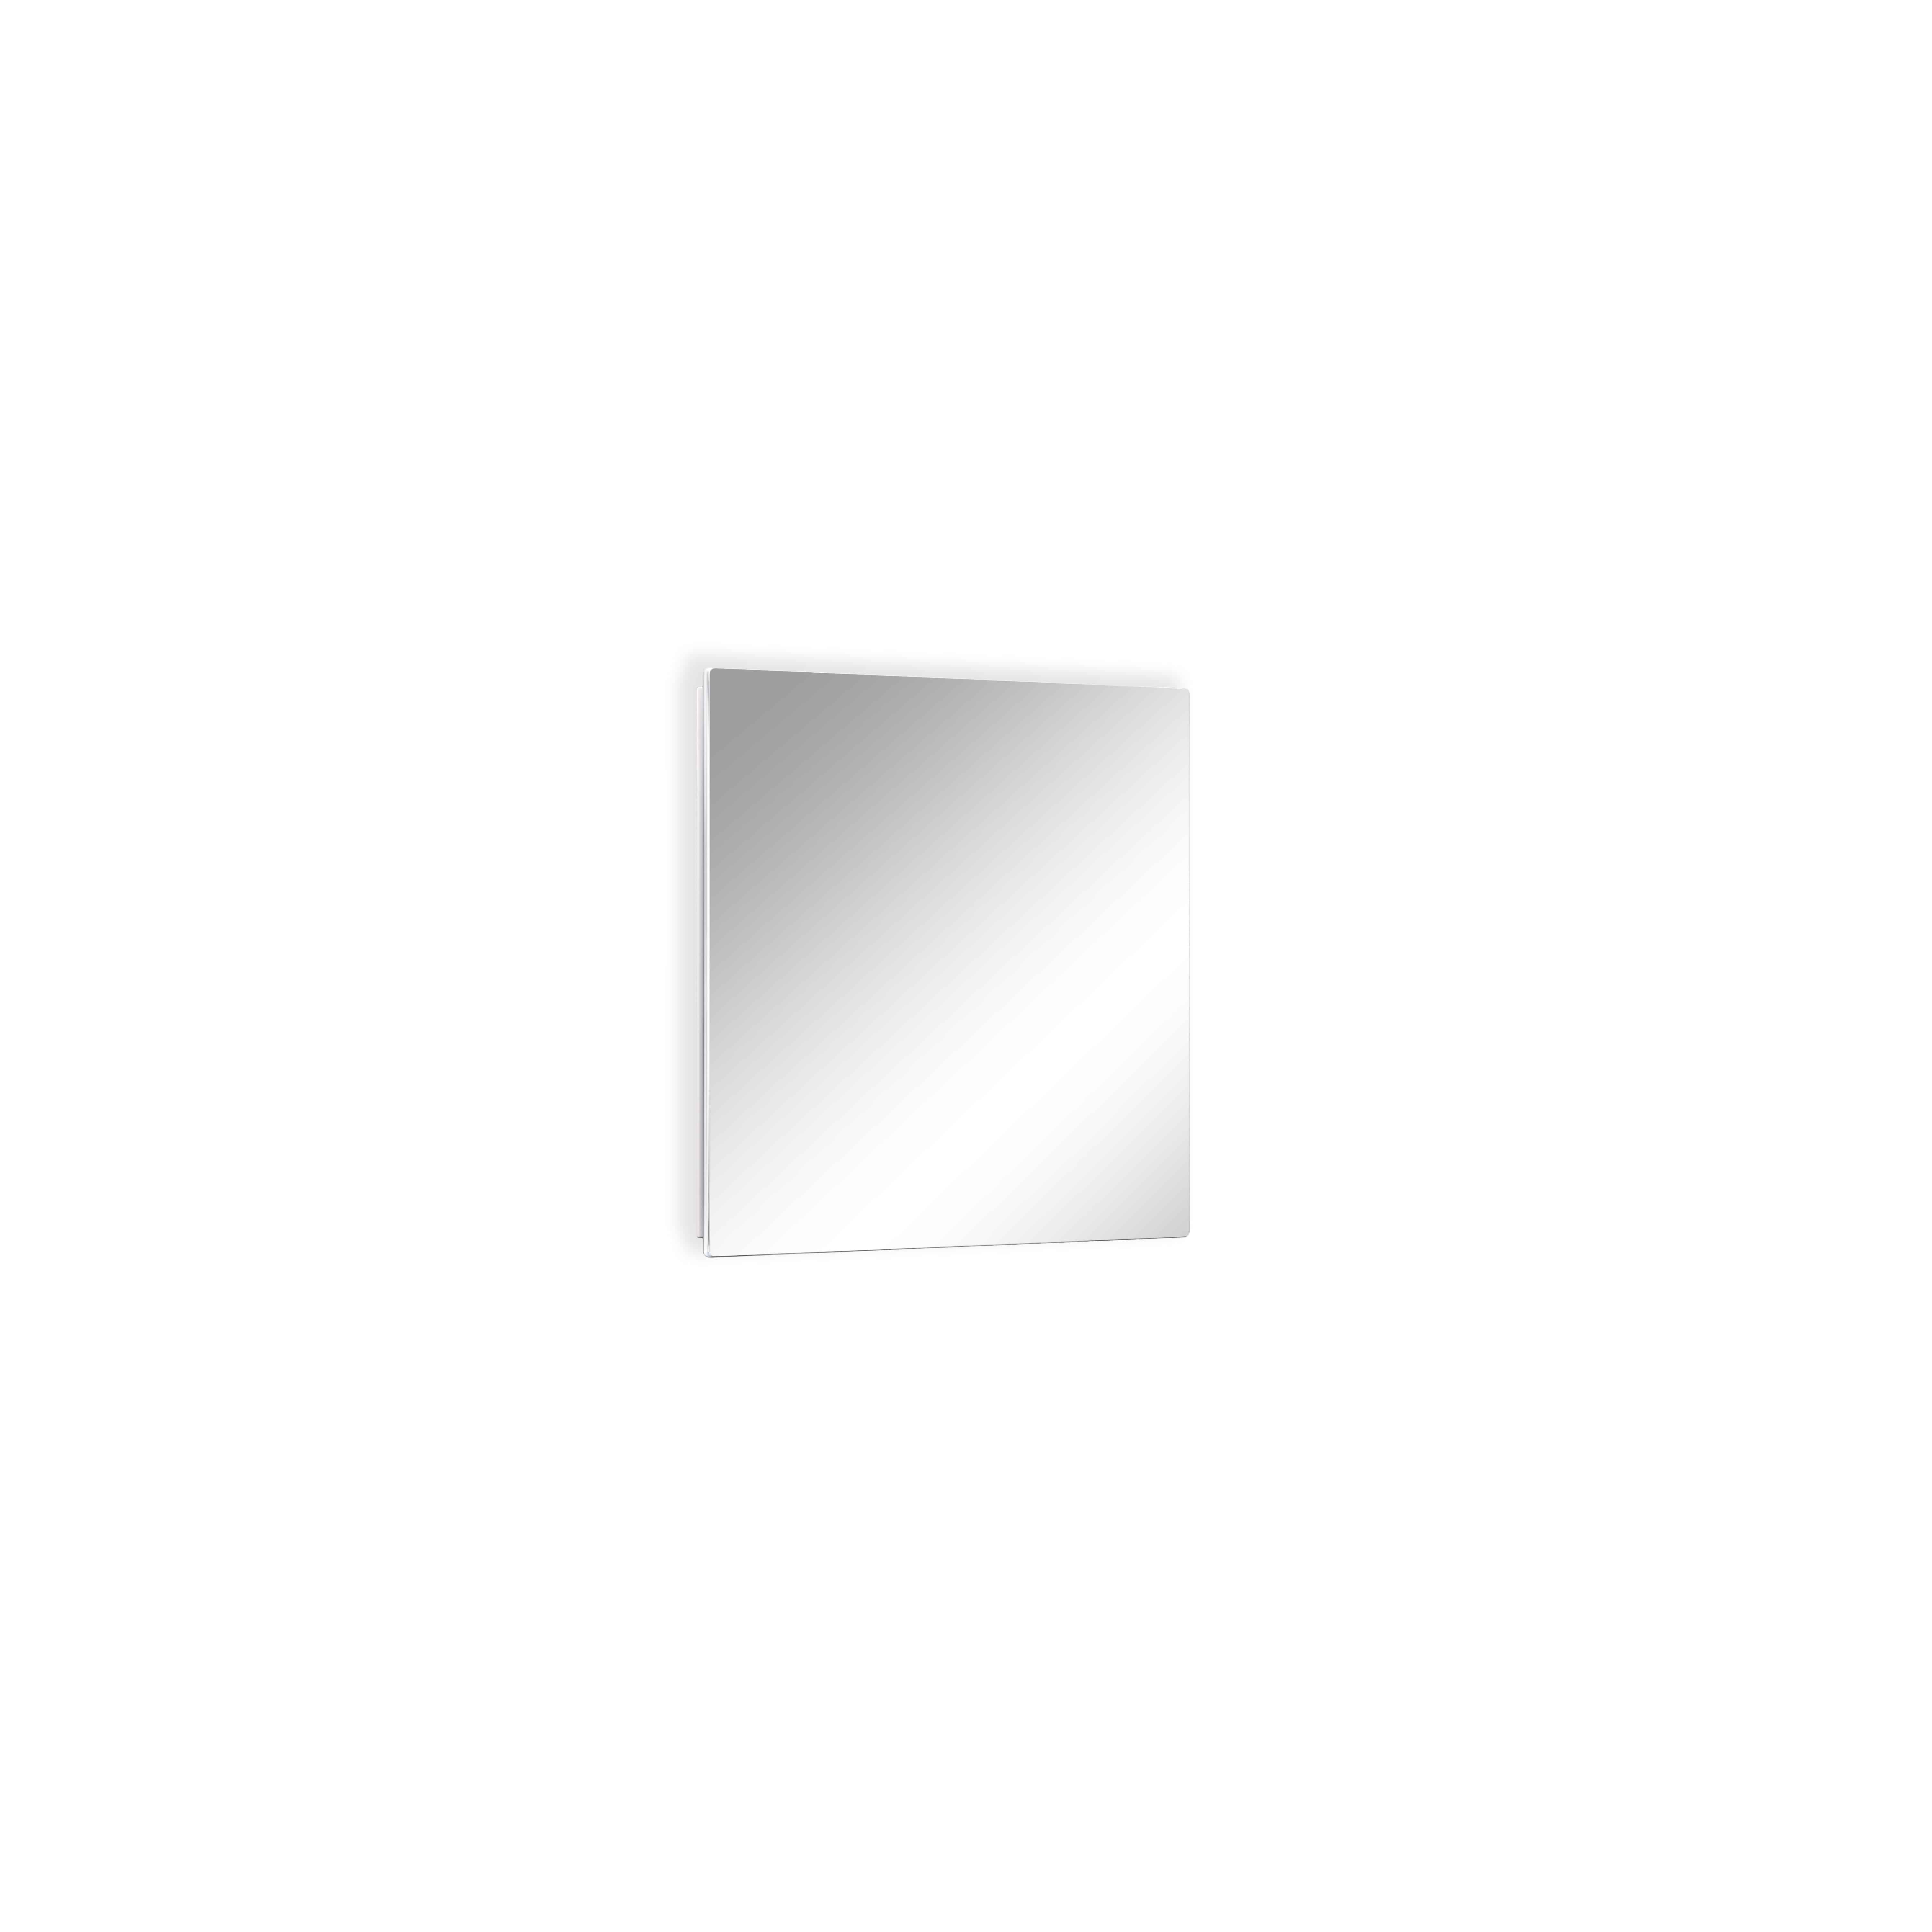 Etherma 39650 Infrarotheizung LAVA 2.0, Glas Spiegel, 50x63cm, 250W, 230V